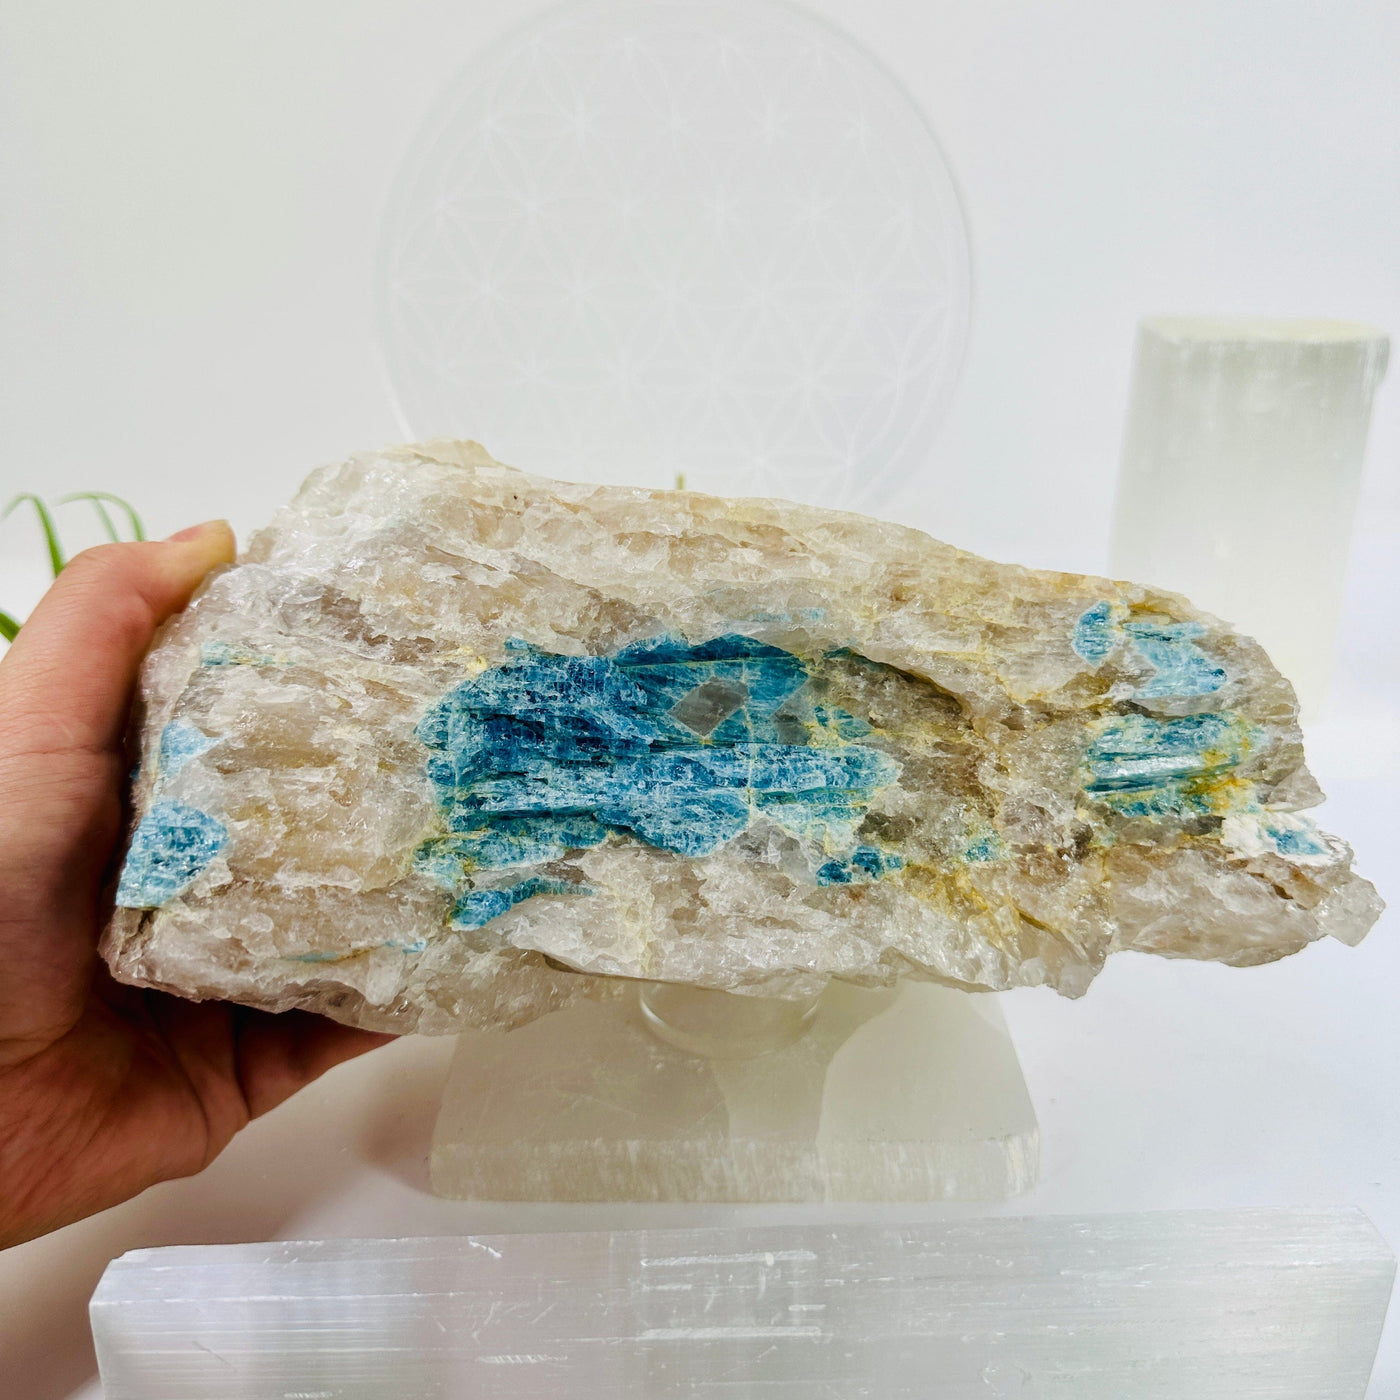 Aquamarine Crystal in Matrix